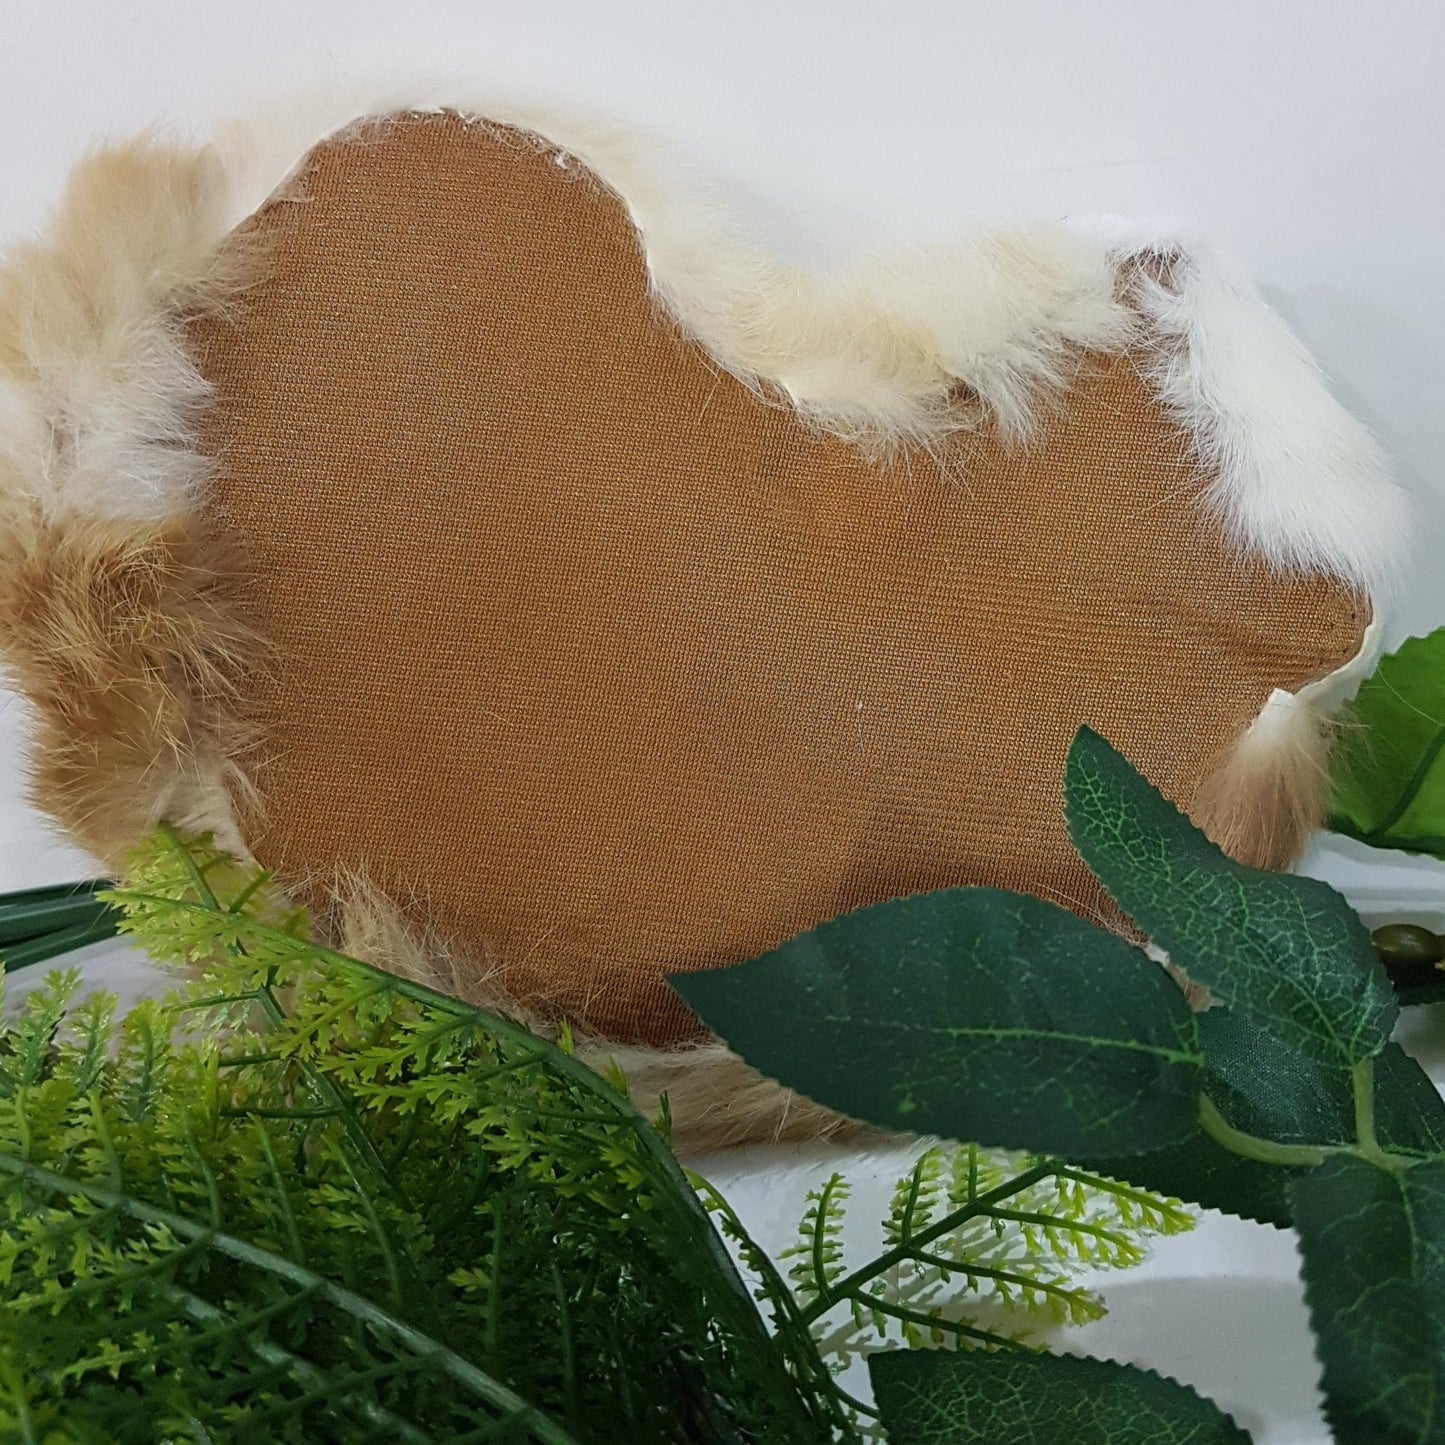 Ginger Lifelike Sleeping Cat Toy With White Stripe.